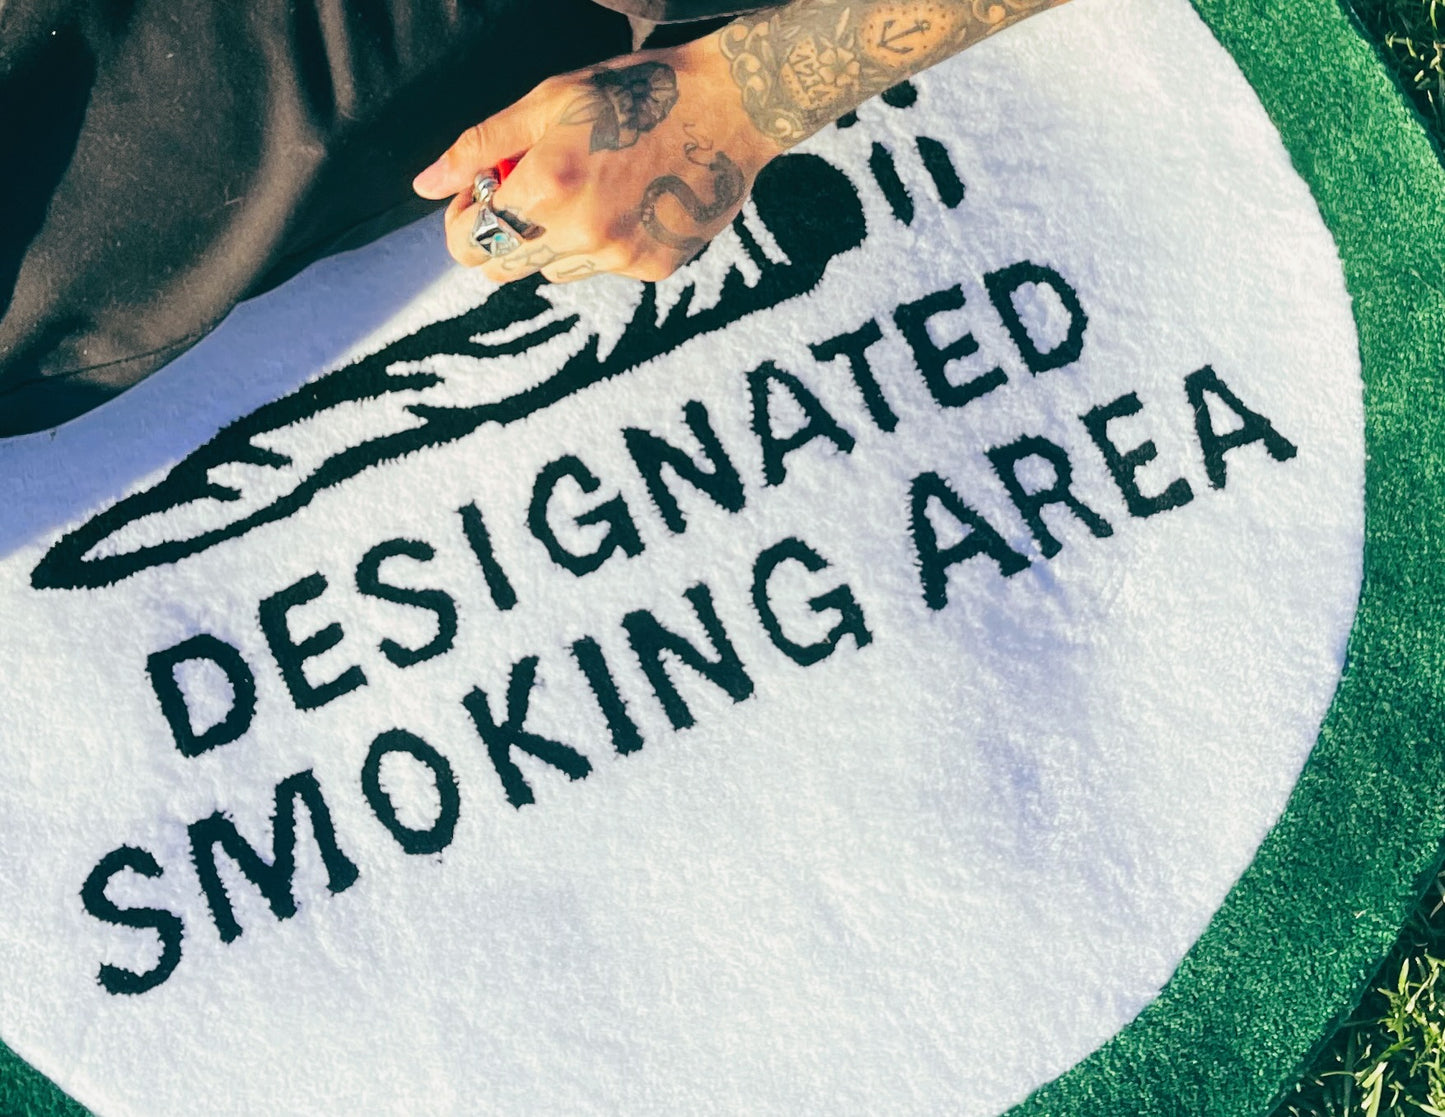 4ft “Designated Smoking Area” Hand Tufted area rug